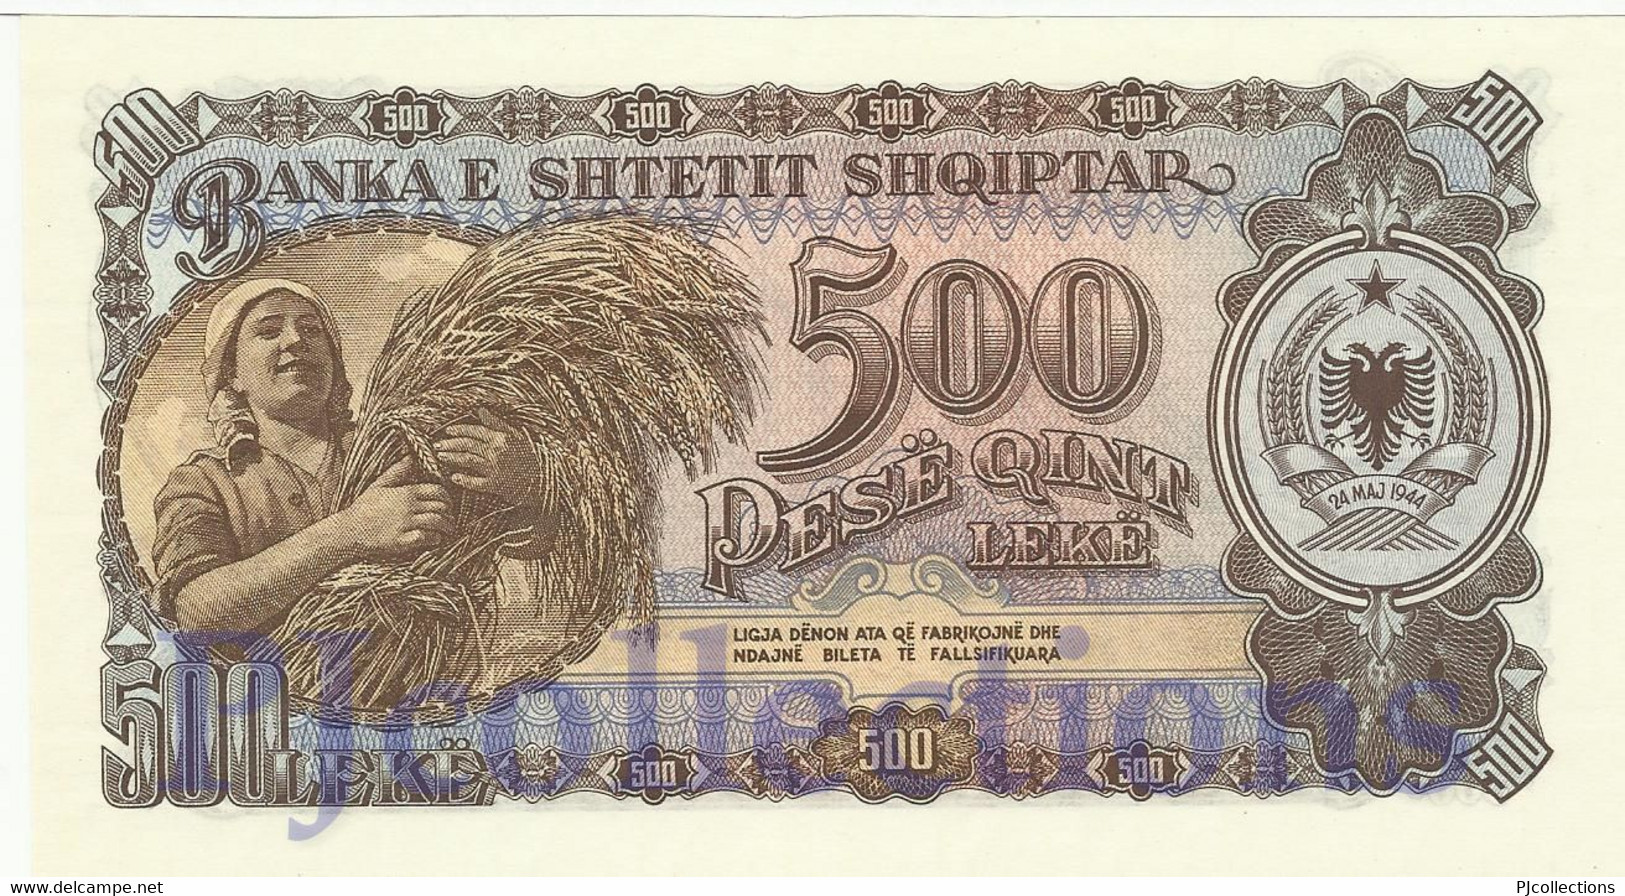 ALBANIA 500 LEKE 1957 PICK 31a AUNC - Albania